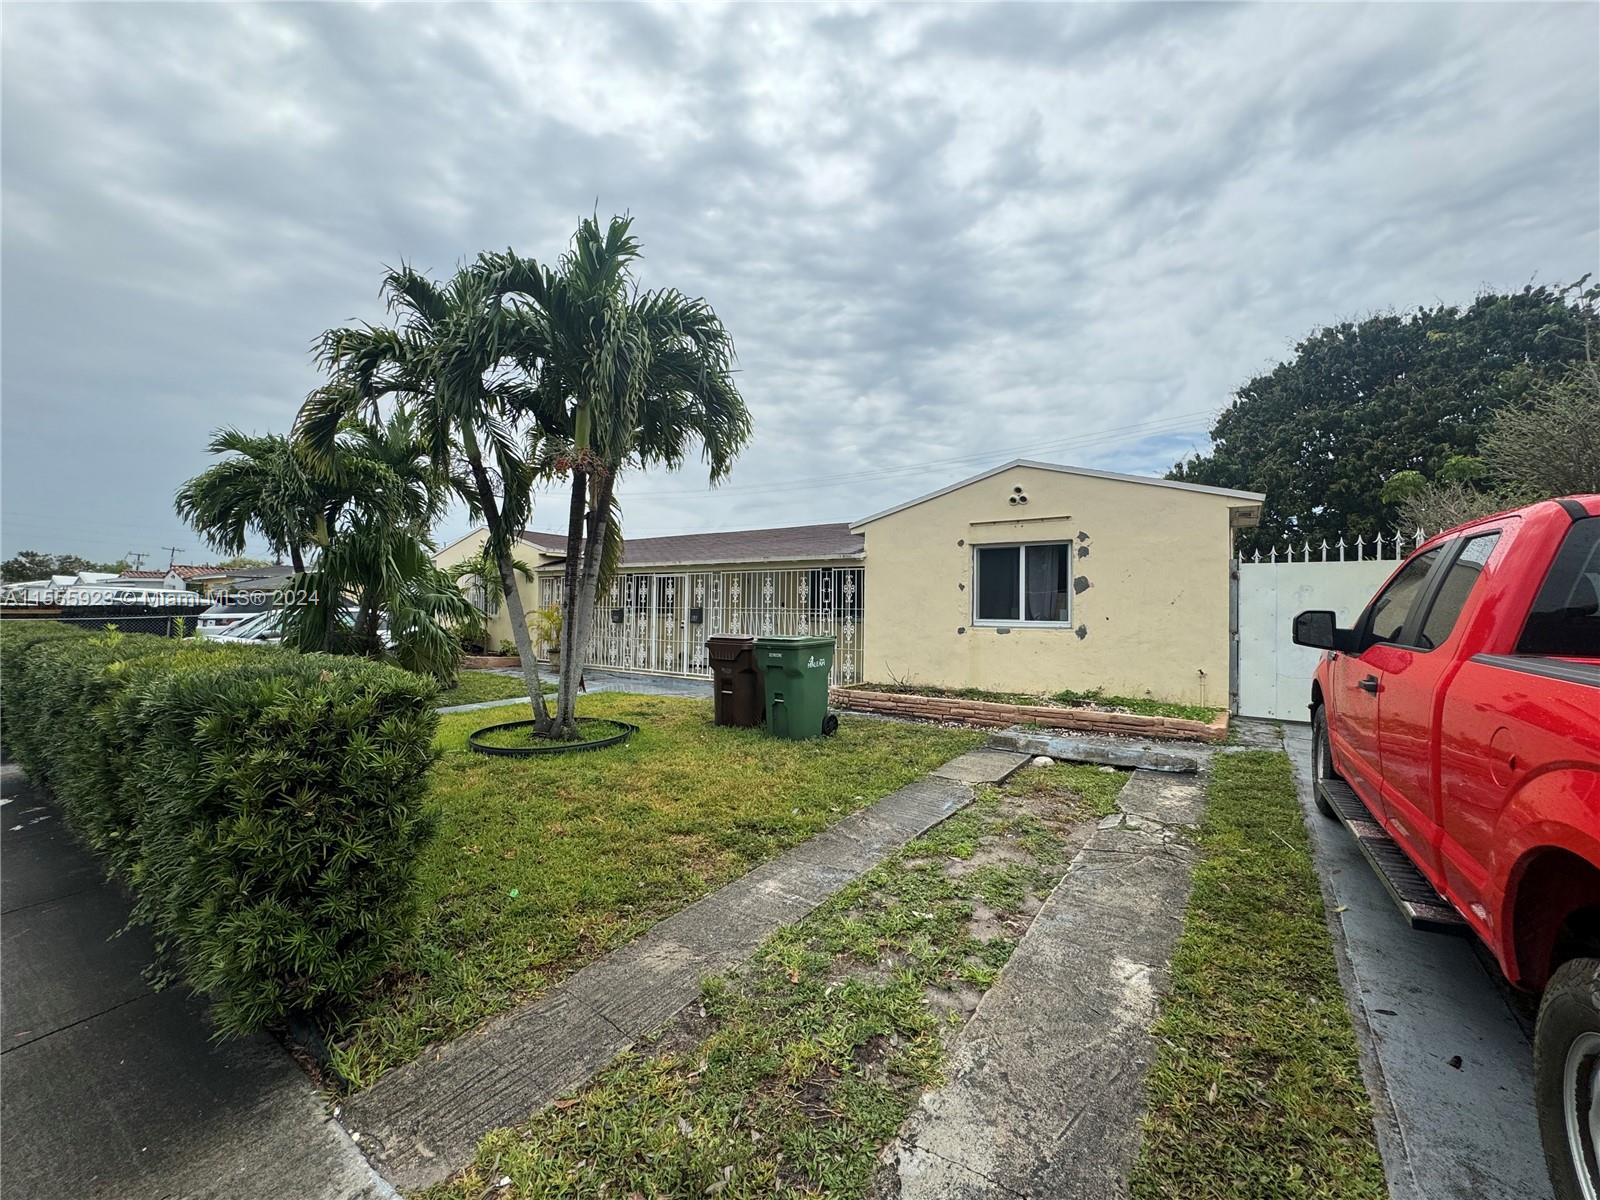 Rental Property at 66 Ne 6th Ave, Hialeah, Miami-Dade County, Florida -  - $799,000 MO.